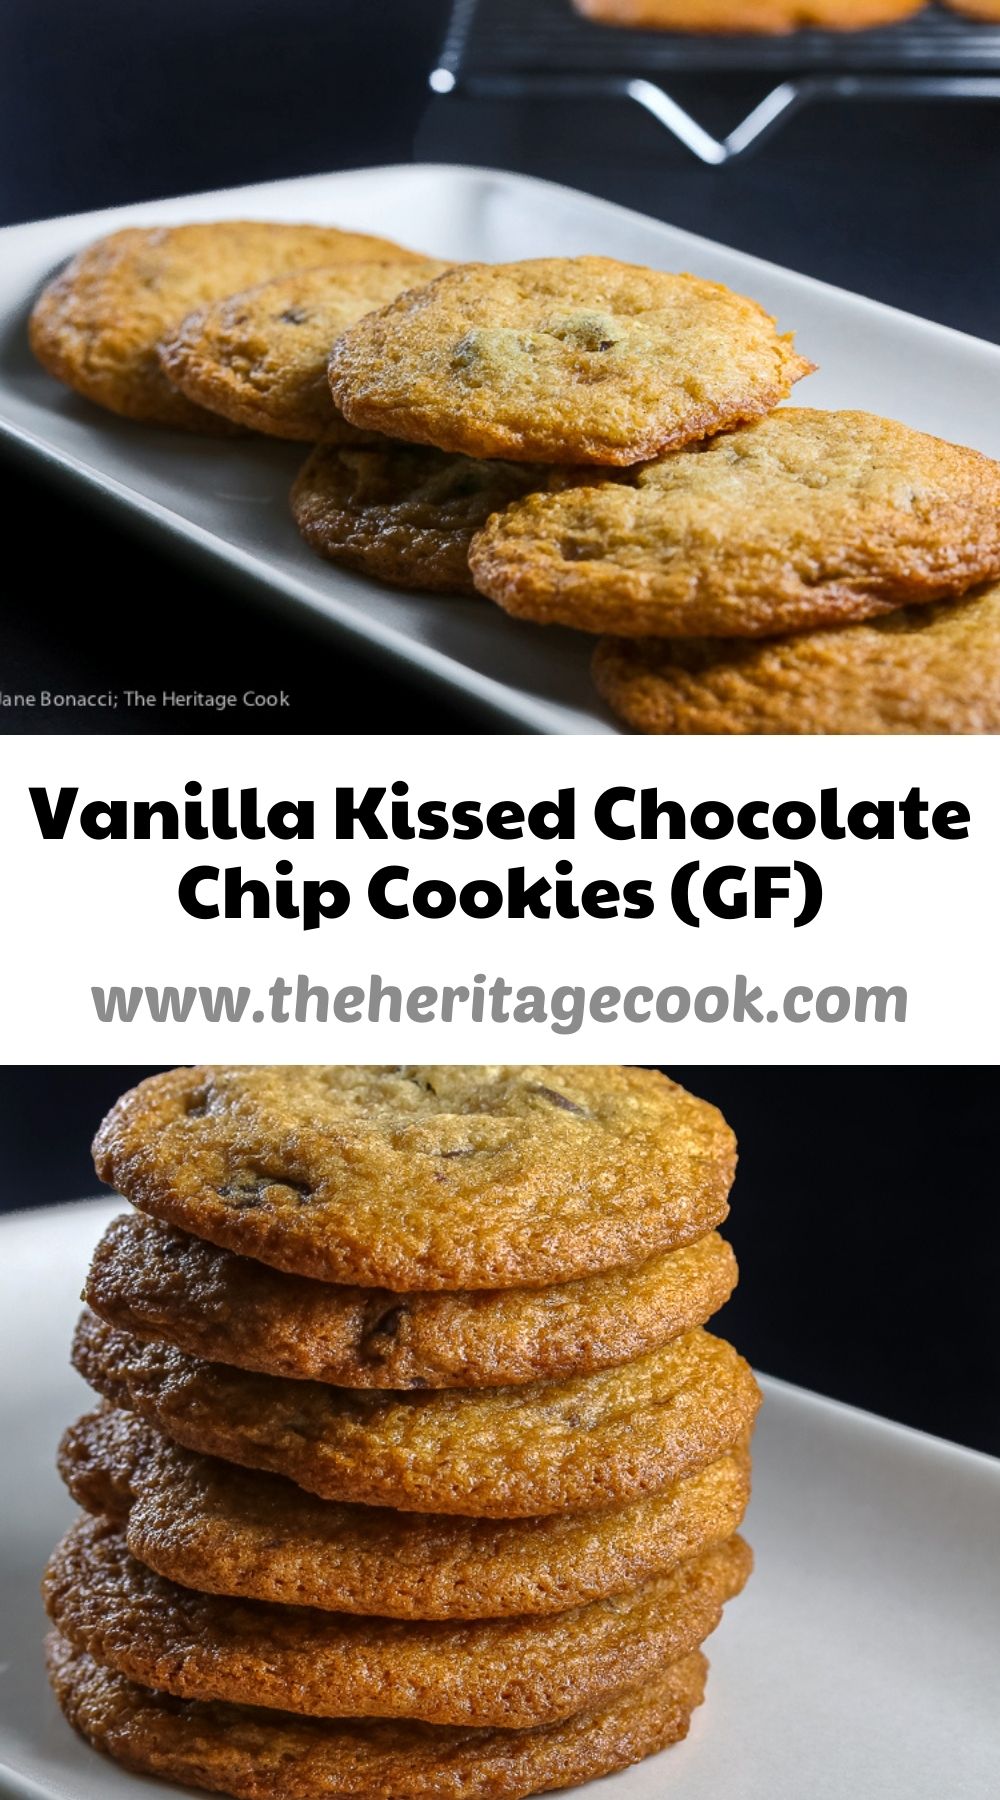 Vanilla Kissed Chocolate Chip Cookies (Gluten Free) © 2021 Jane Bonacci, The Heritage Cook